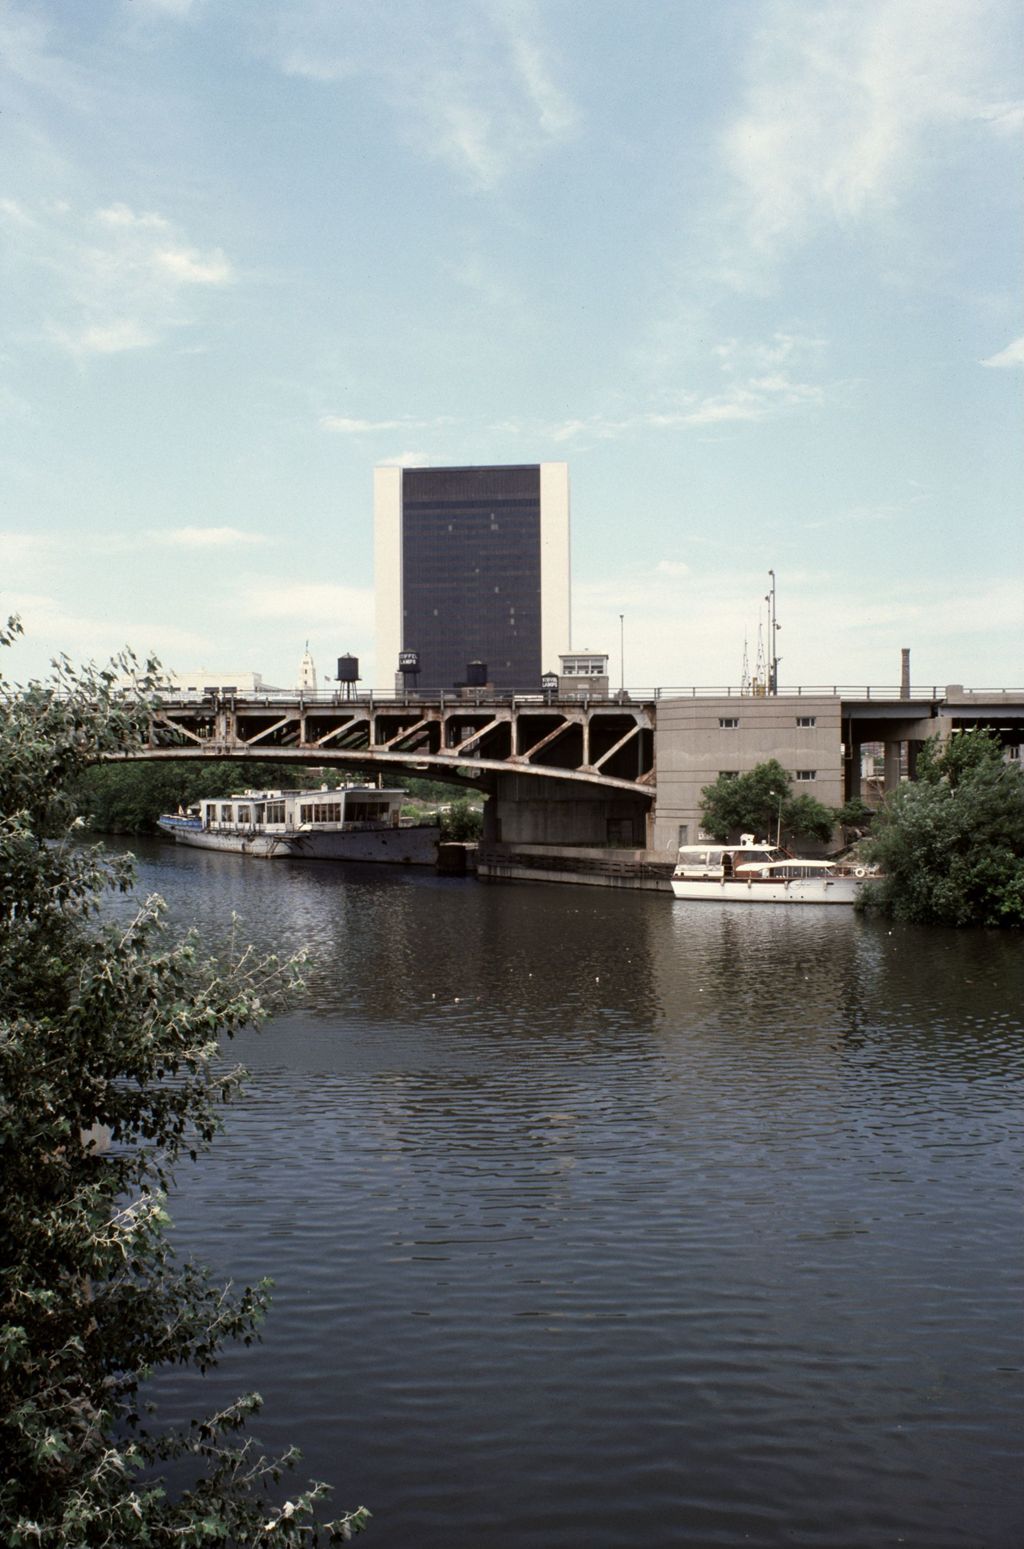 Miniature of Chicago River, Ohio Street Bridge and Montgomery Ward & Company headquarters